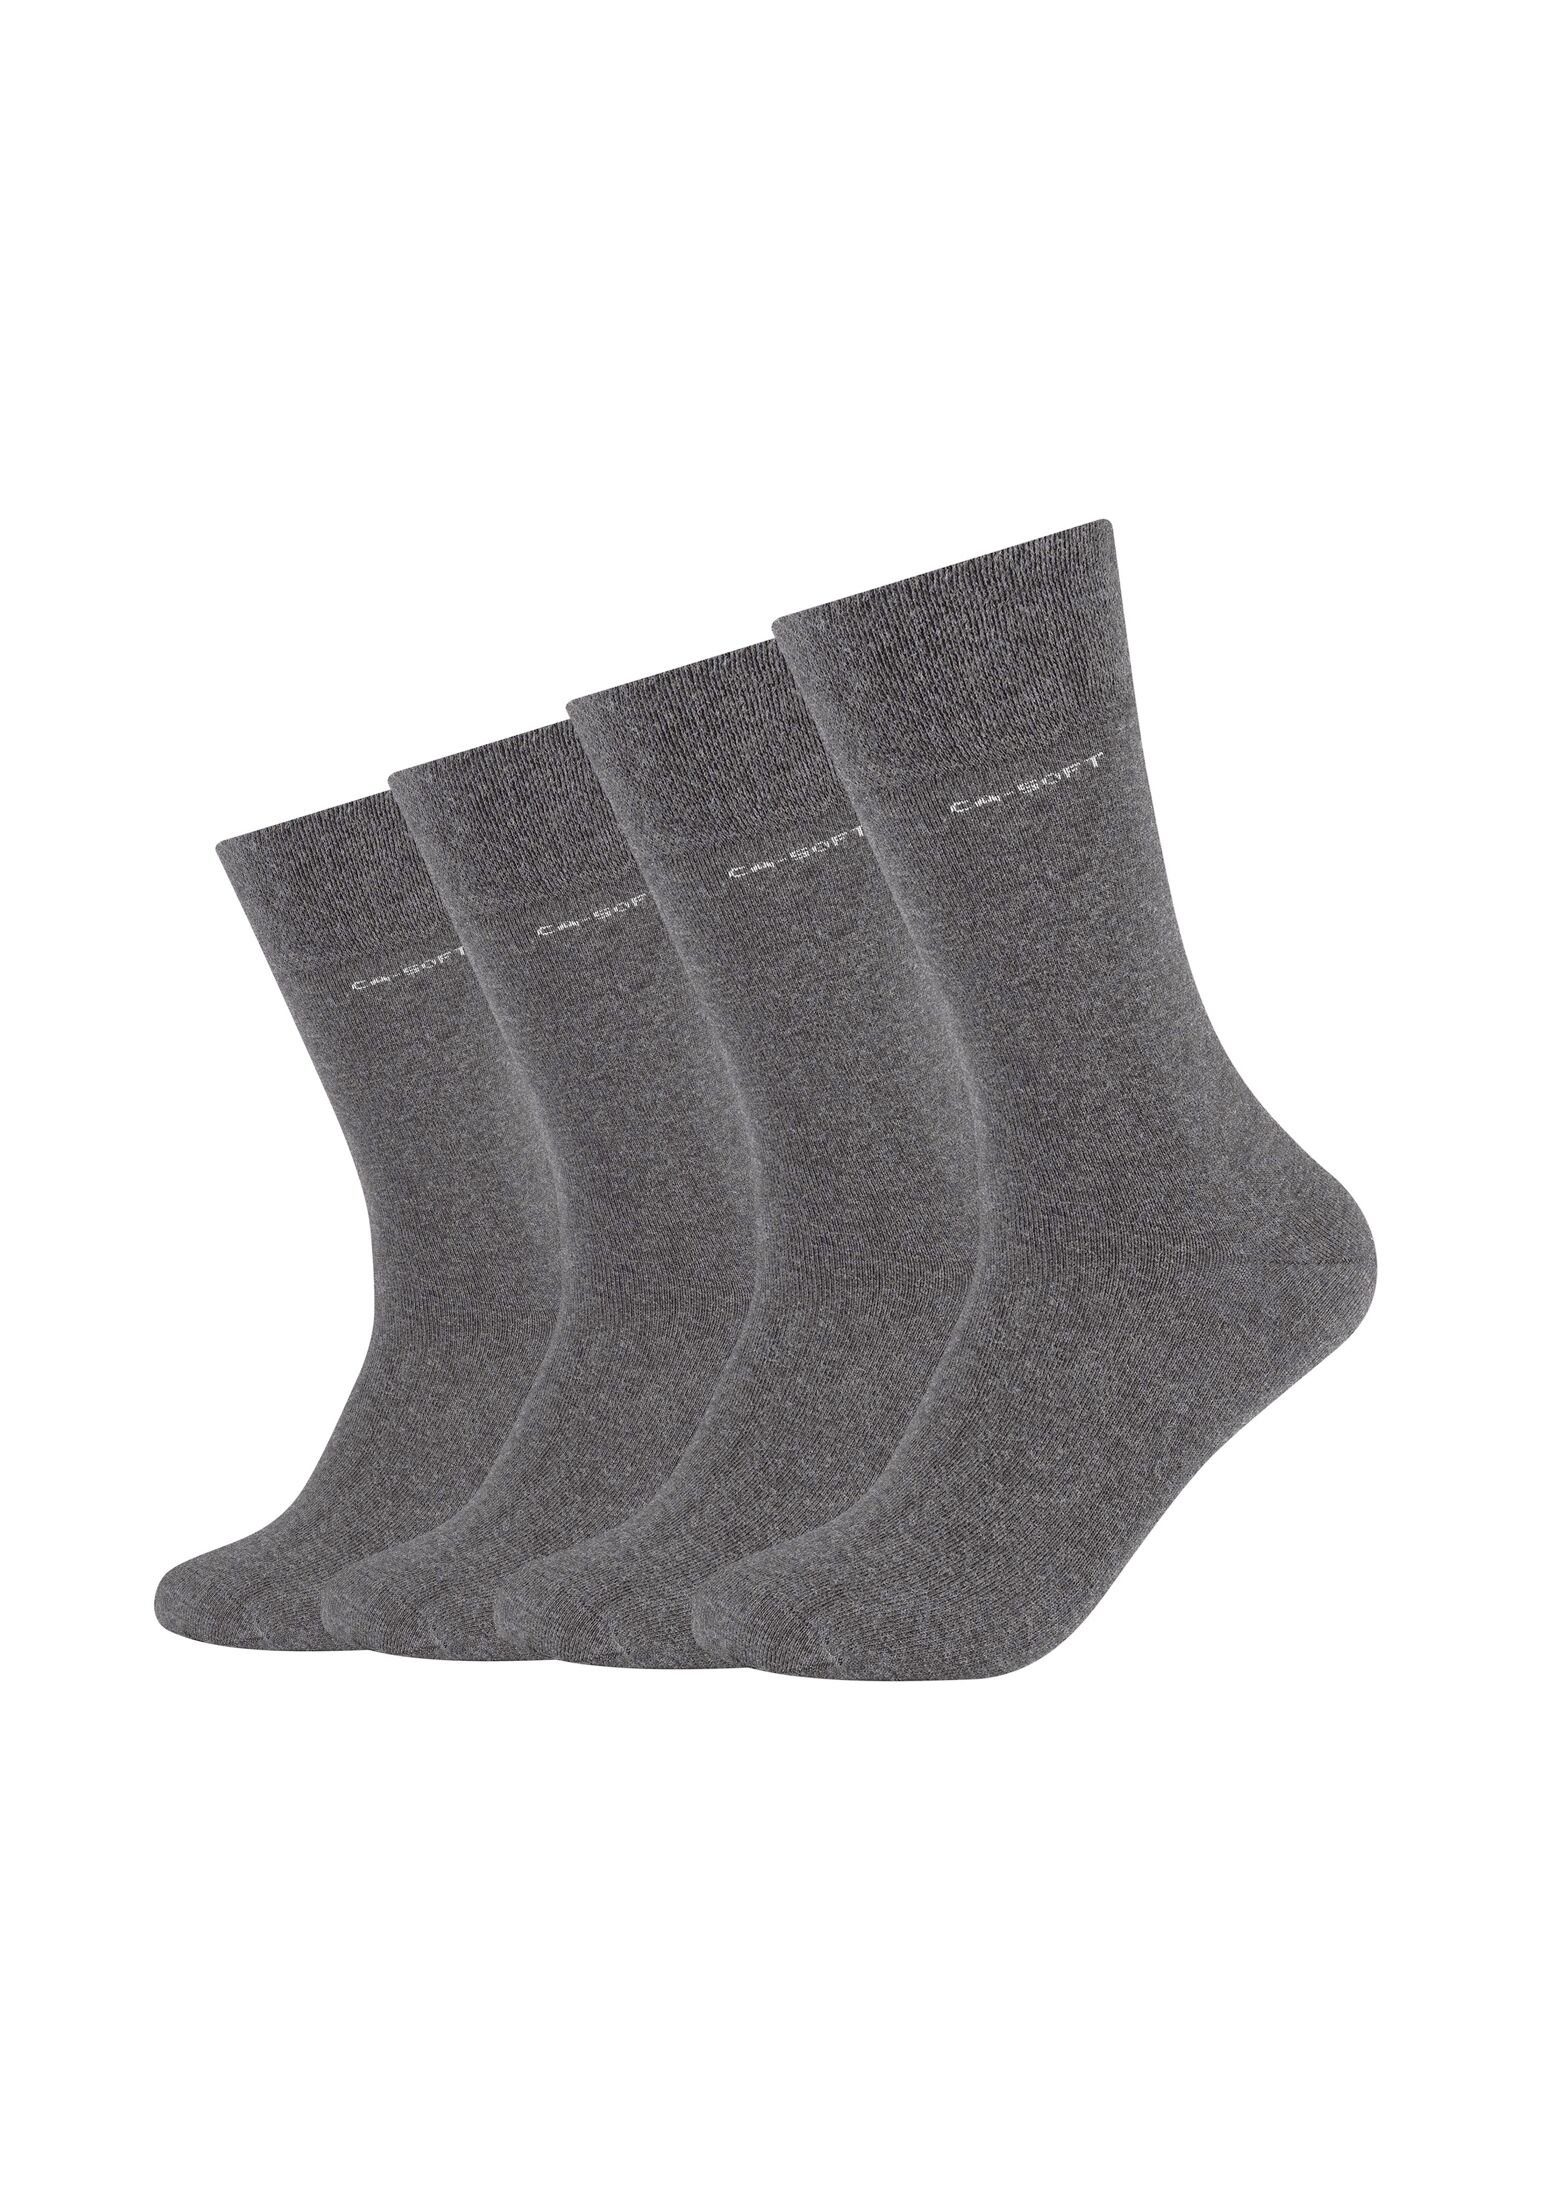 Socken dark grey Socken Camano 4er Pack melange